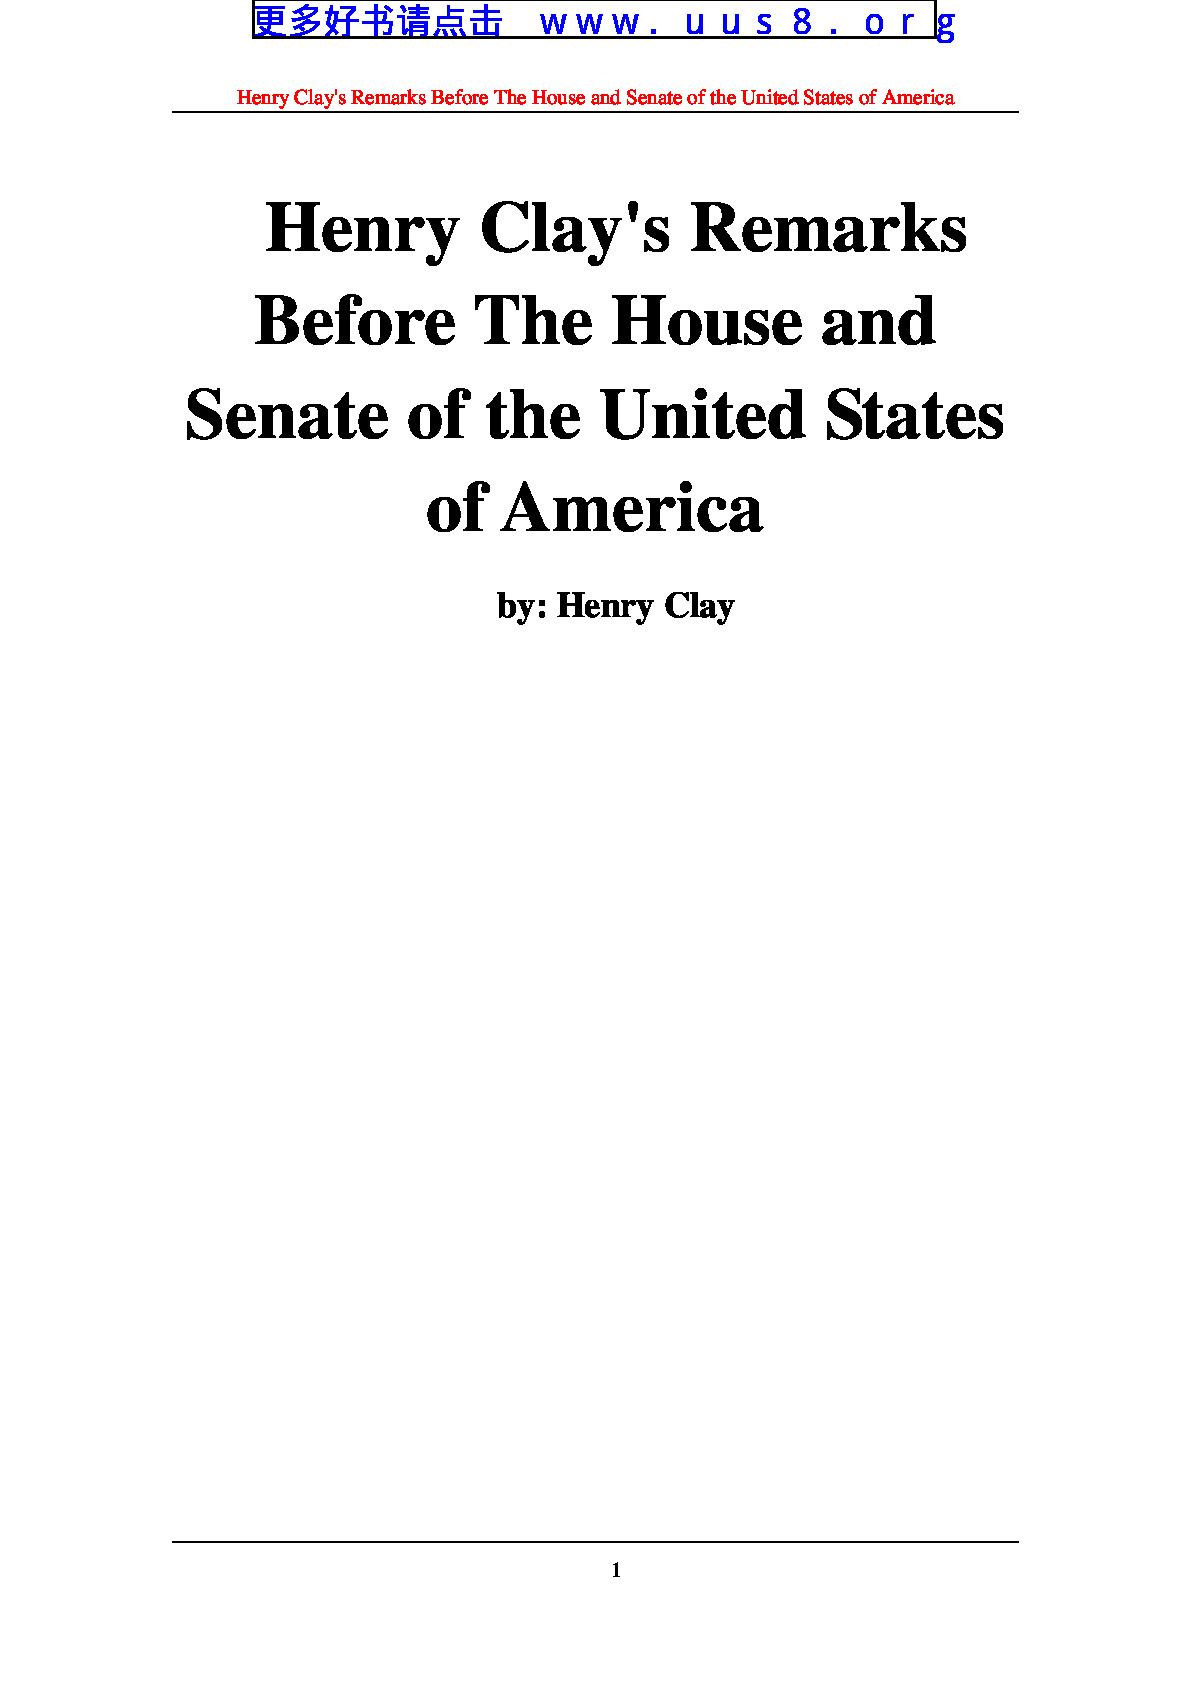 Henry_Clay’s_Remarks_in_House_and_Senate(享利克雷在参议院和众议院的讲话)